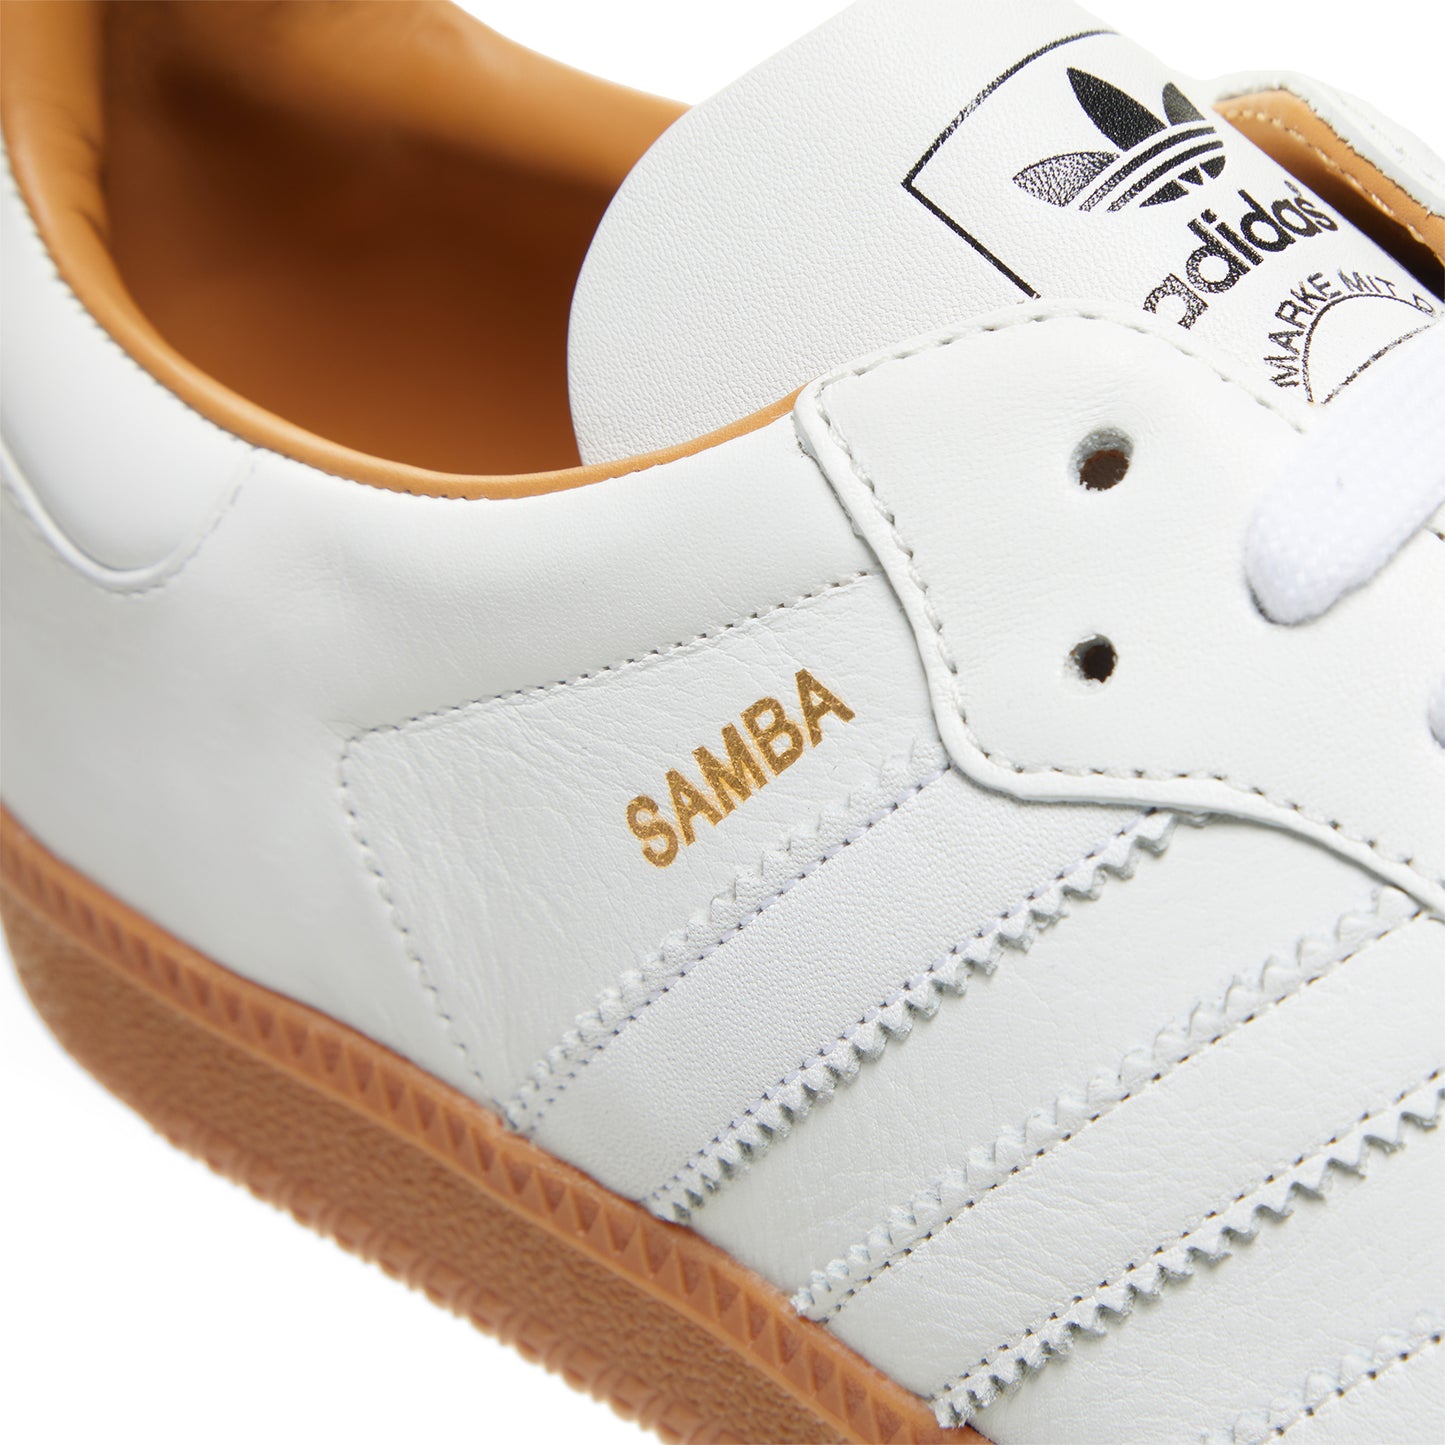 Adidas Samba OG Made in Italy (Core White/Core Black/Gum)